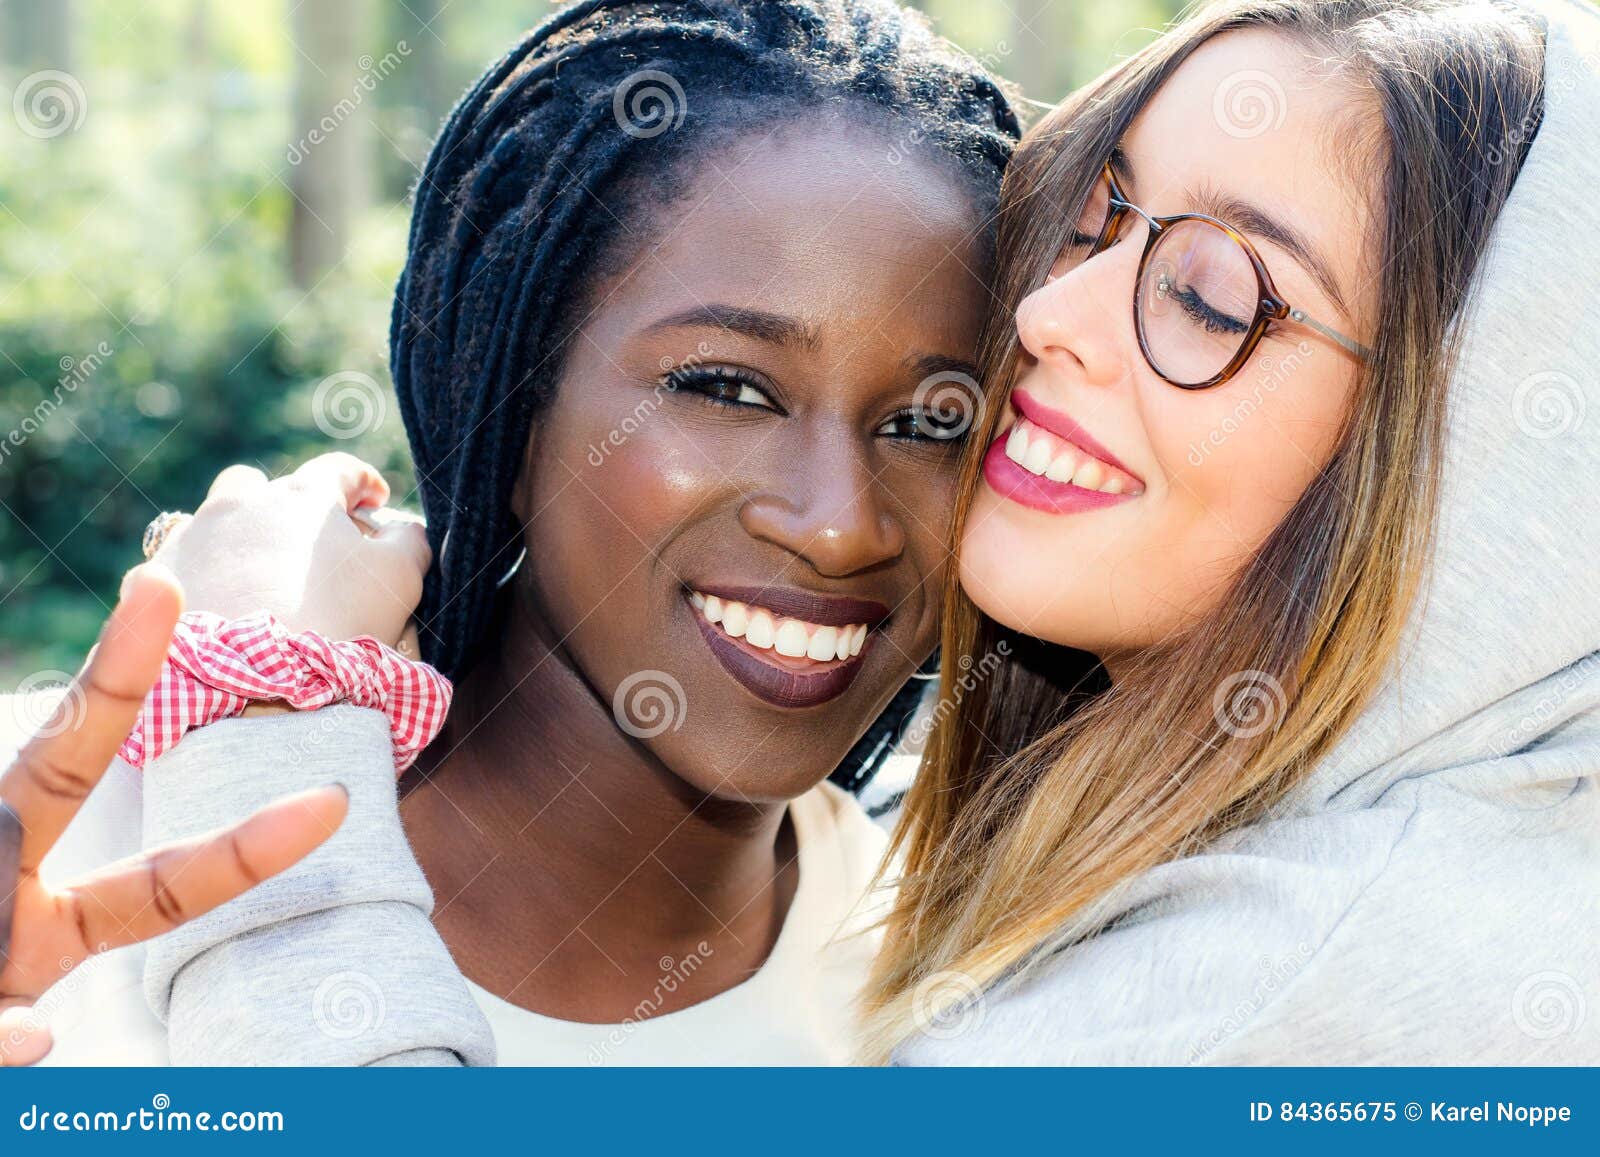 diverse female couple showing affection.